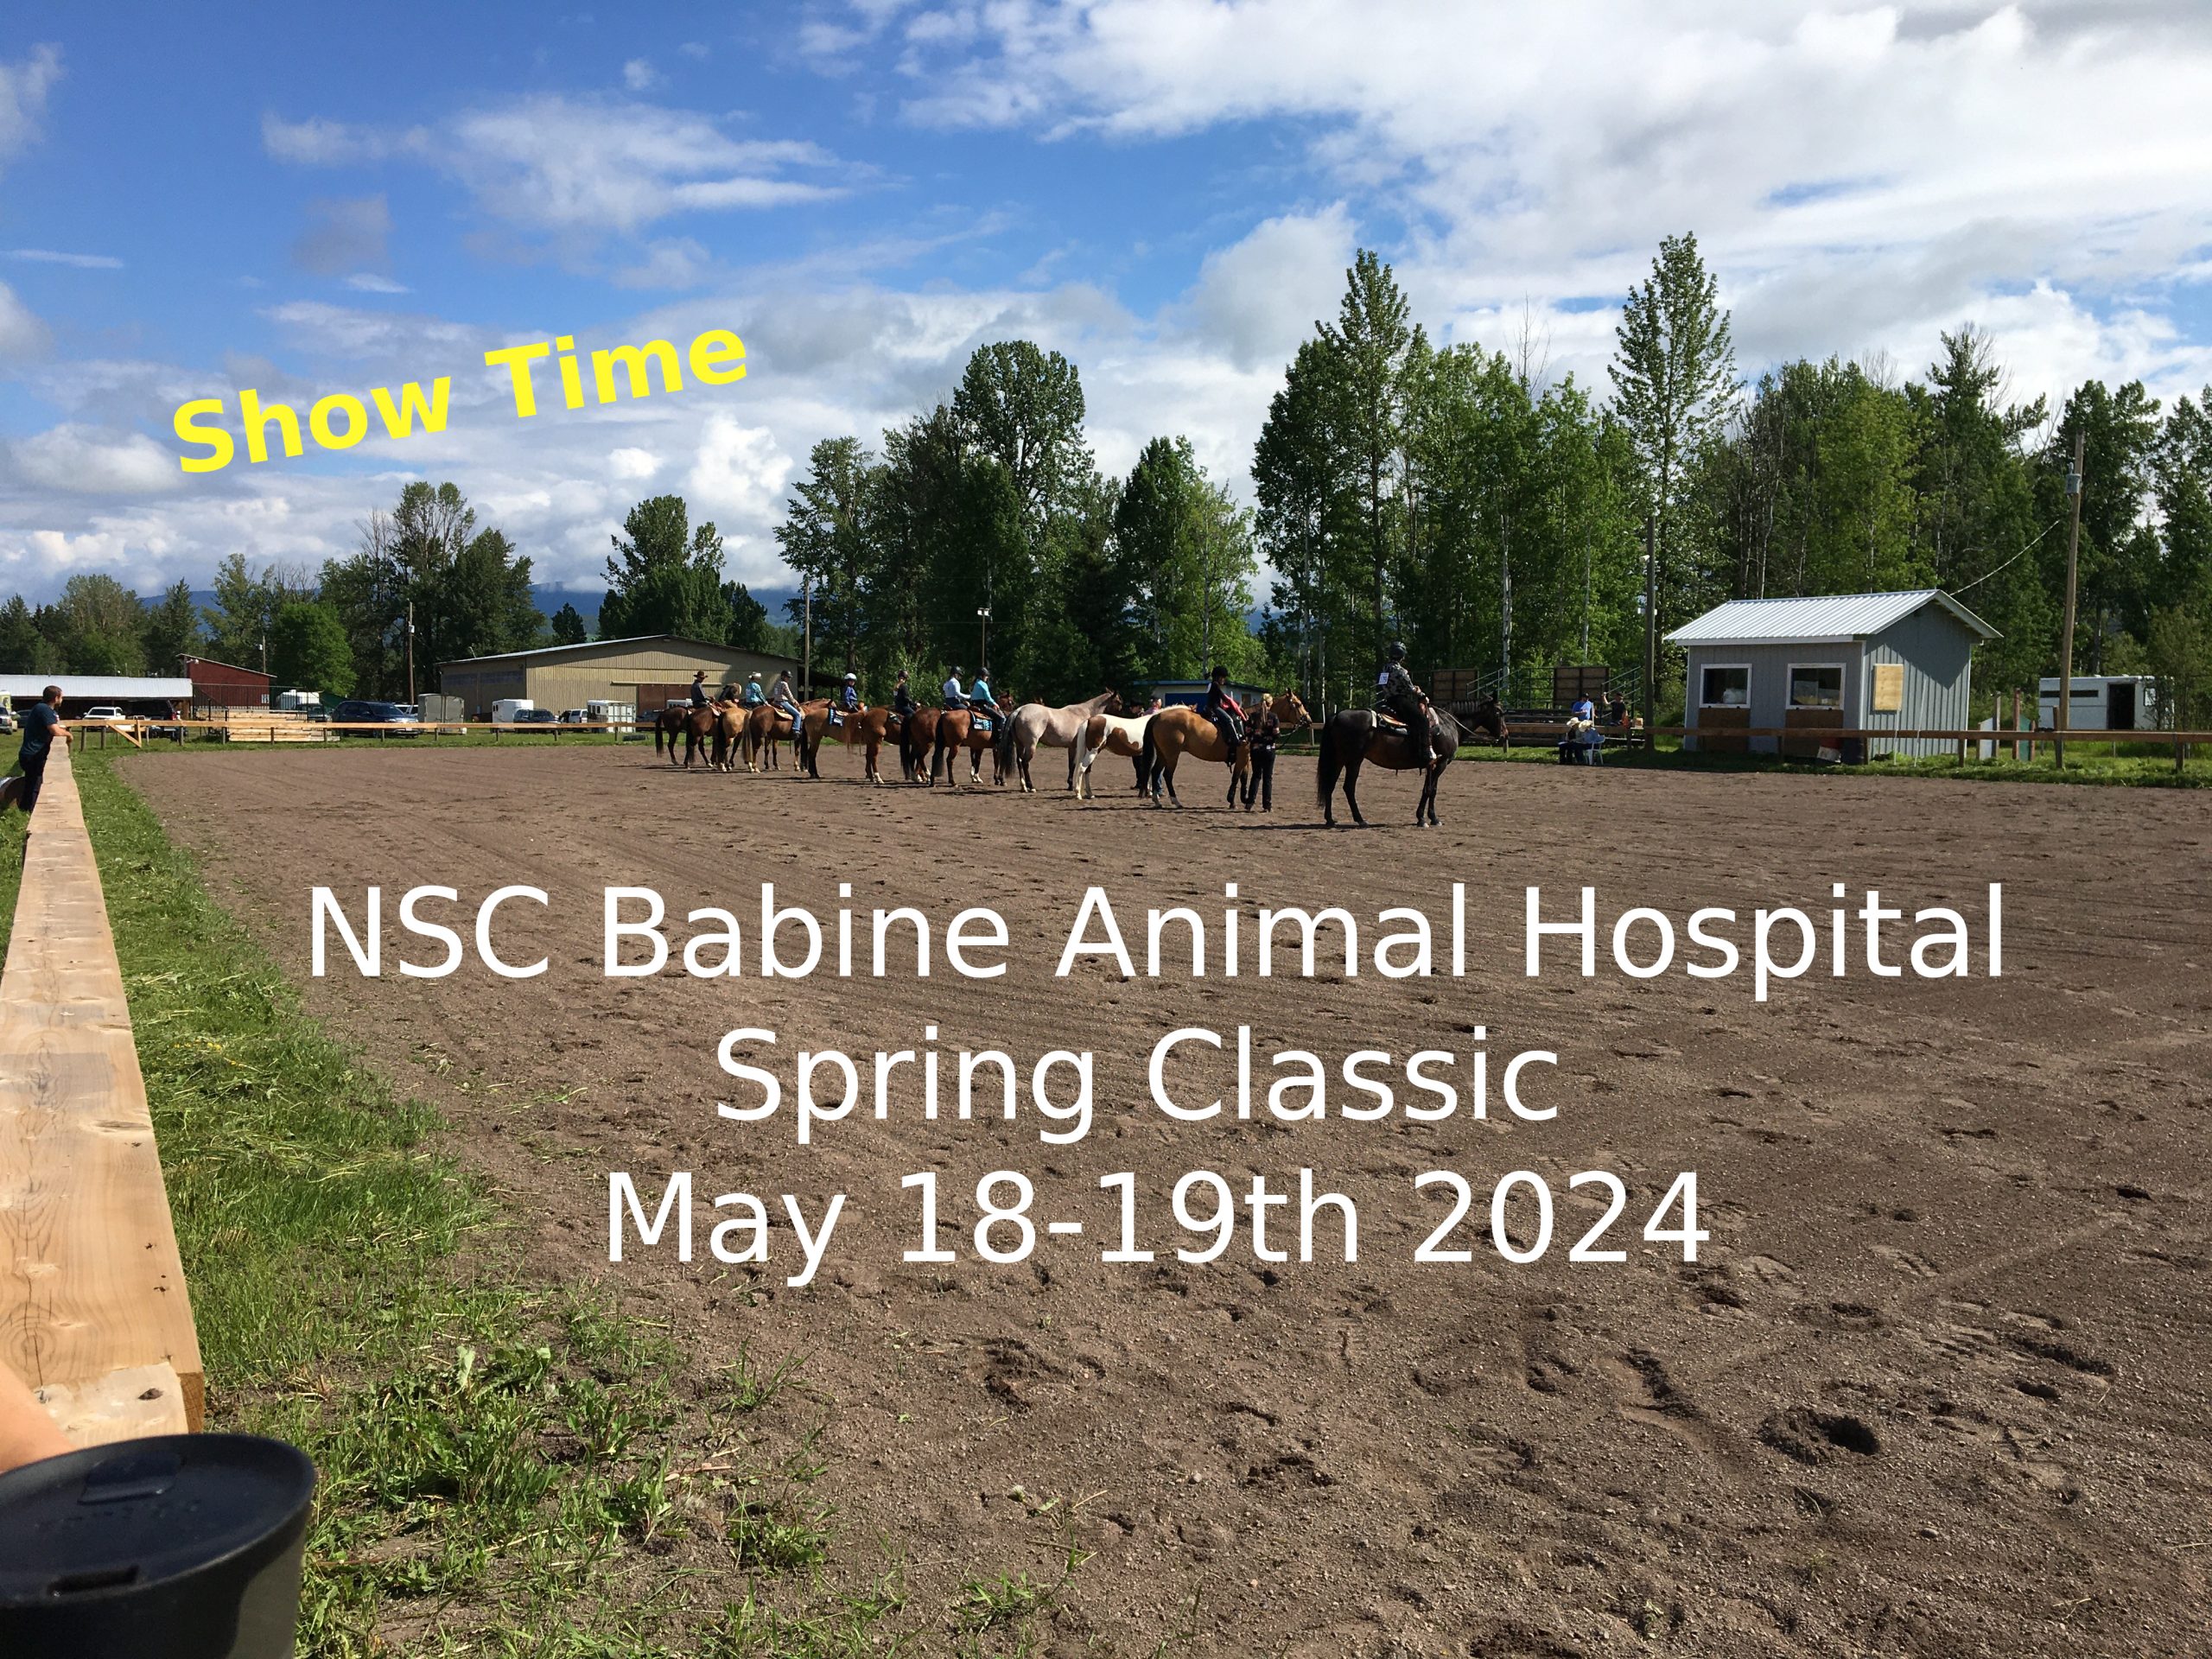 NSC Babine Animal Hospital Spring Classic Show